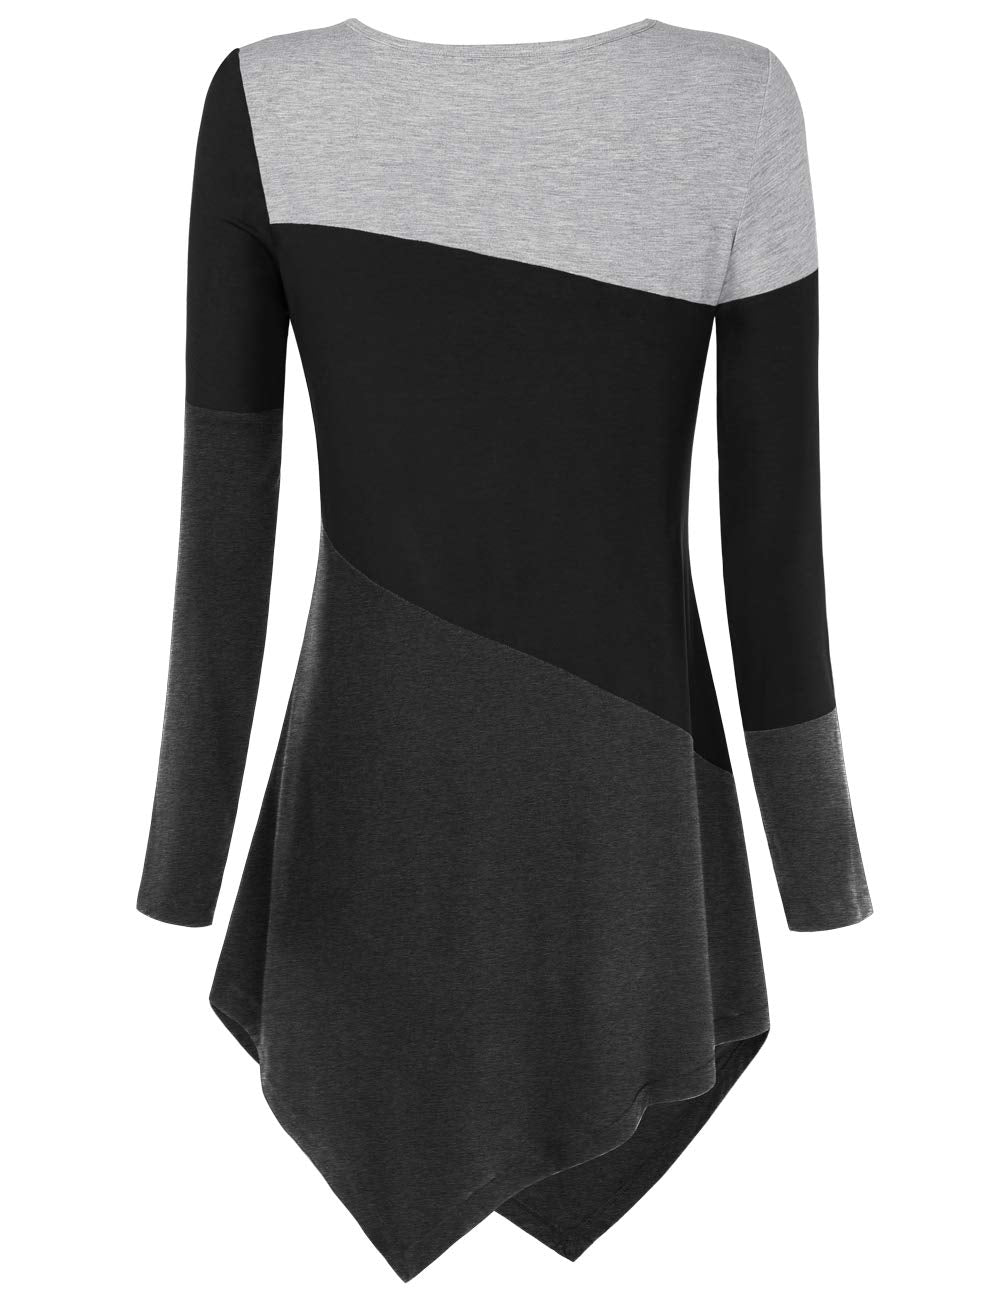 DJT Long Sleeve Black Grey Women's  Tunic Shirts Scoop Neck Hanky Hem Color Block Stretch Casual Fall T Shirt Tops